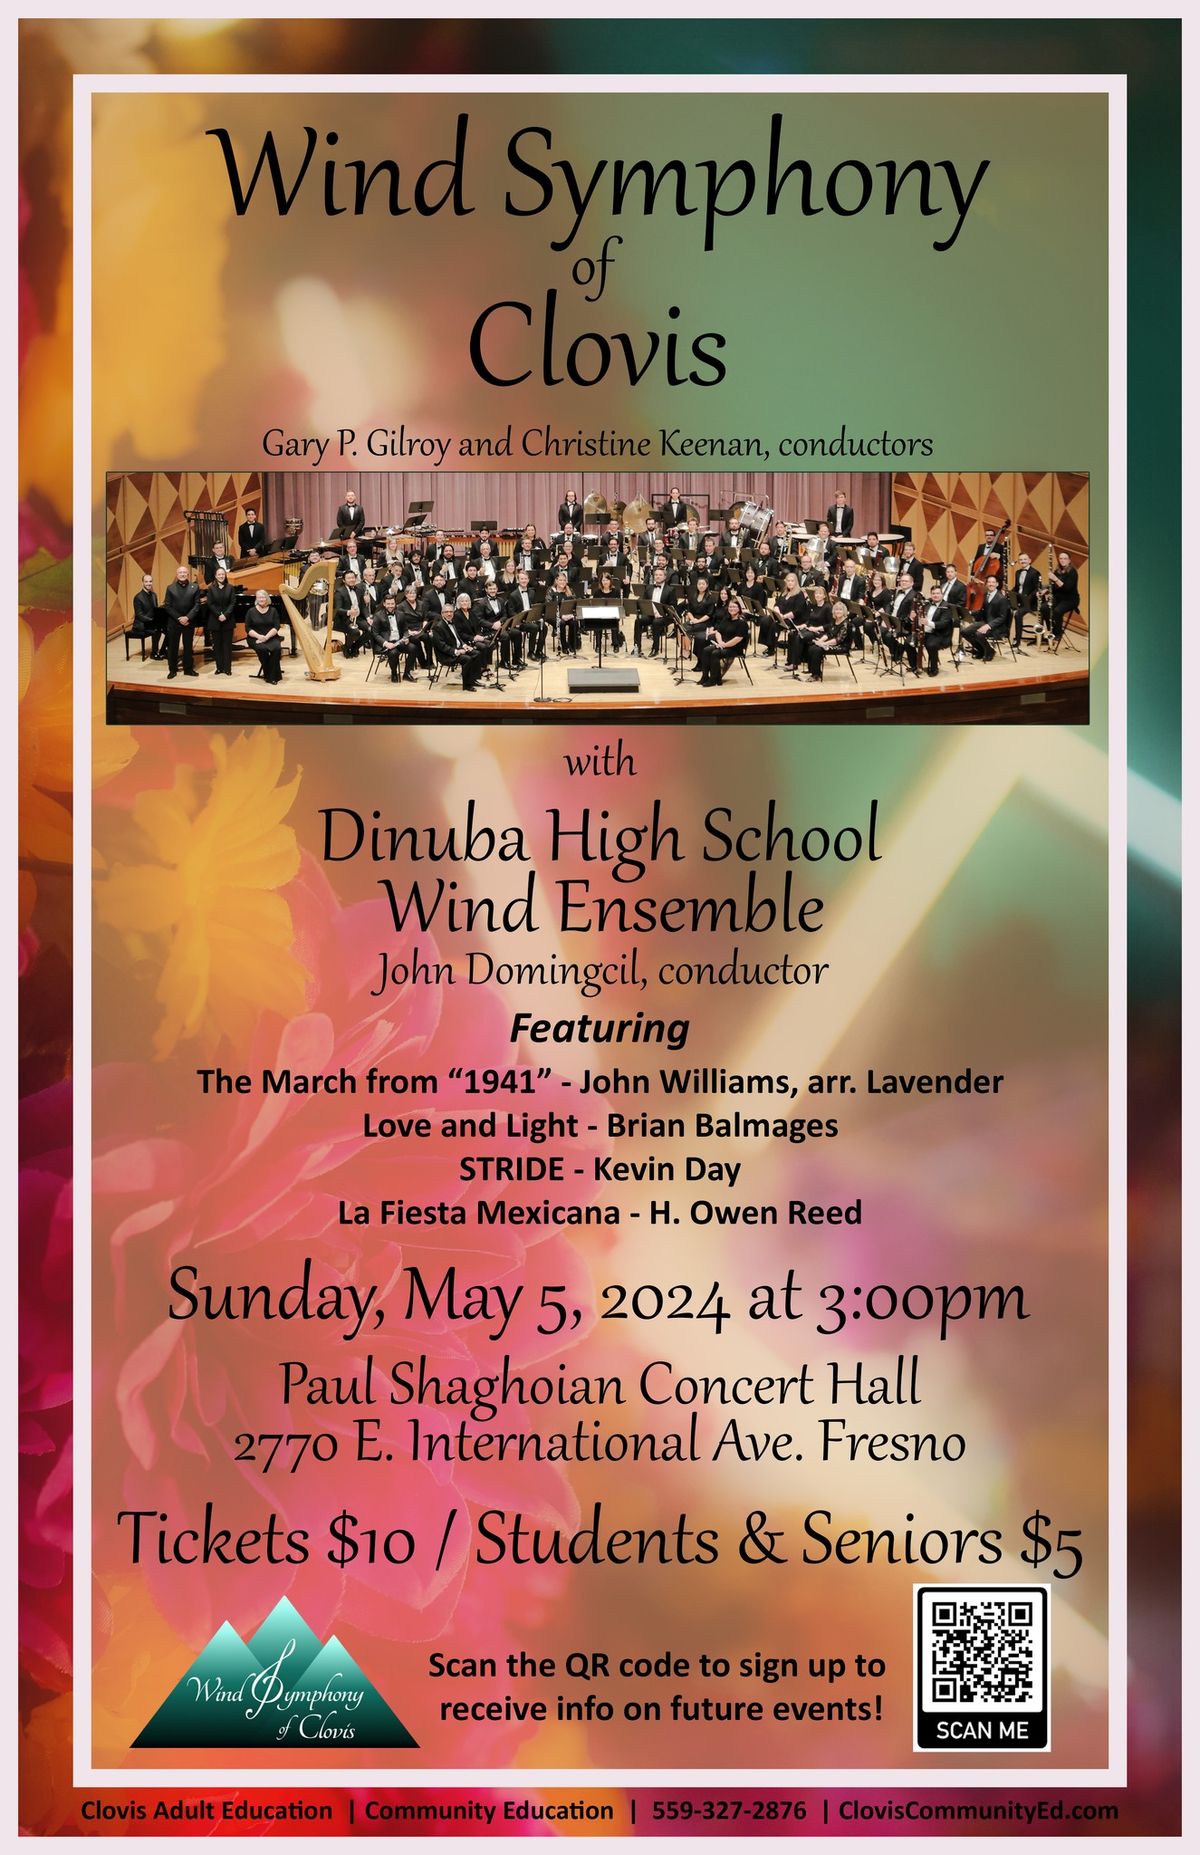 Wind Symphony of Clovis with Dinuba HS Wind Ensemble